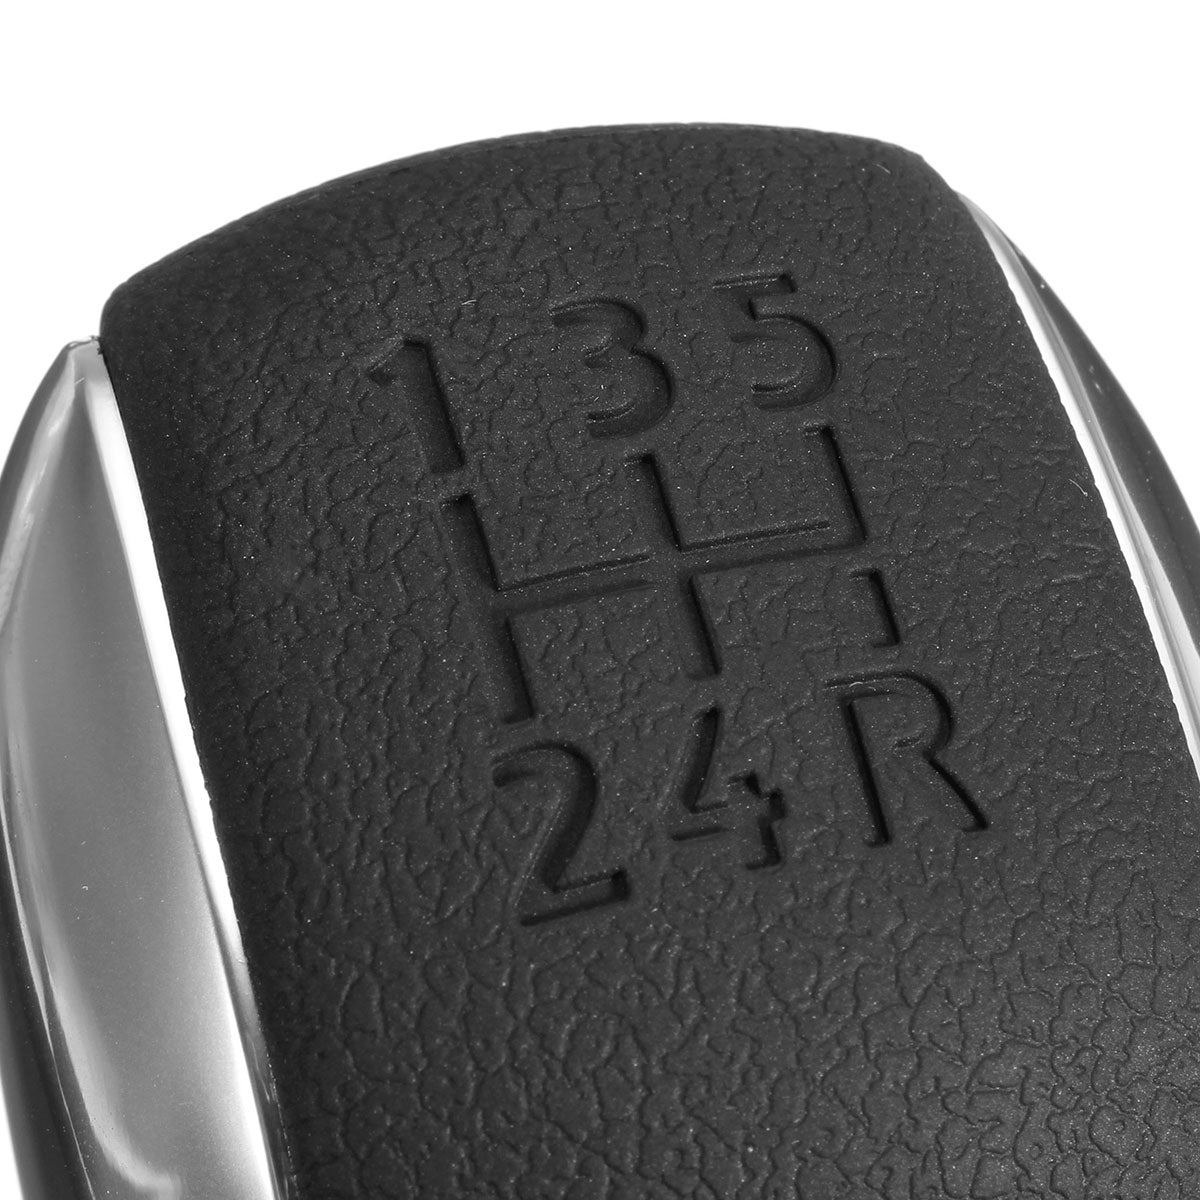 Dark Slate Gray 5 Speed Gear Shift Knob Shifter Head for Peugeot 307 301 206 207 408 308 508 2008 3008 Citroen C4L C2 C-Quatre